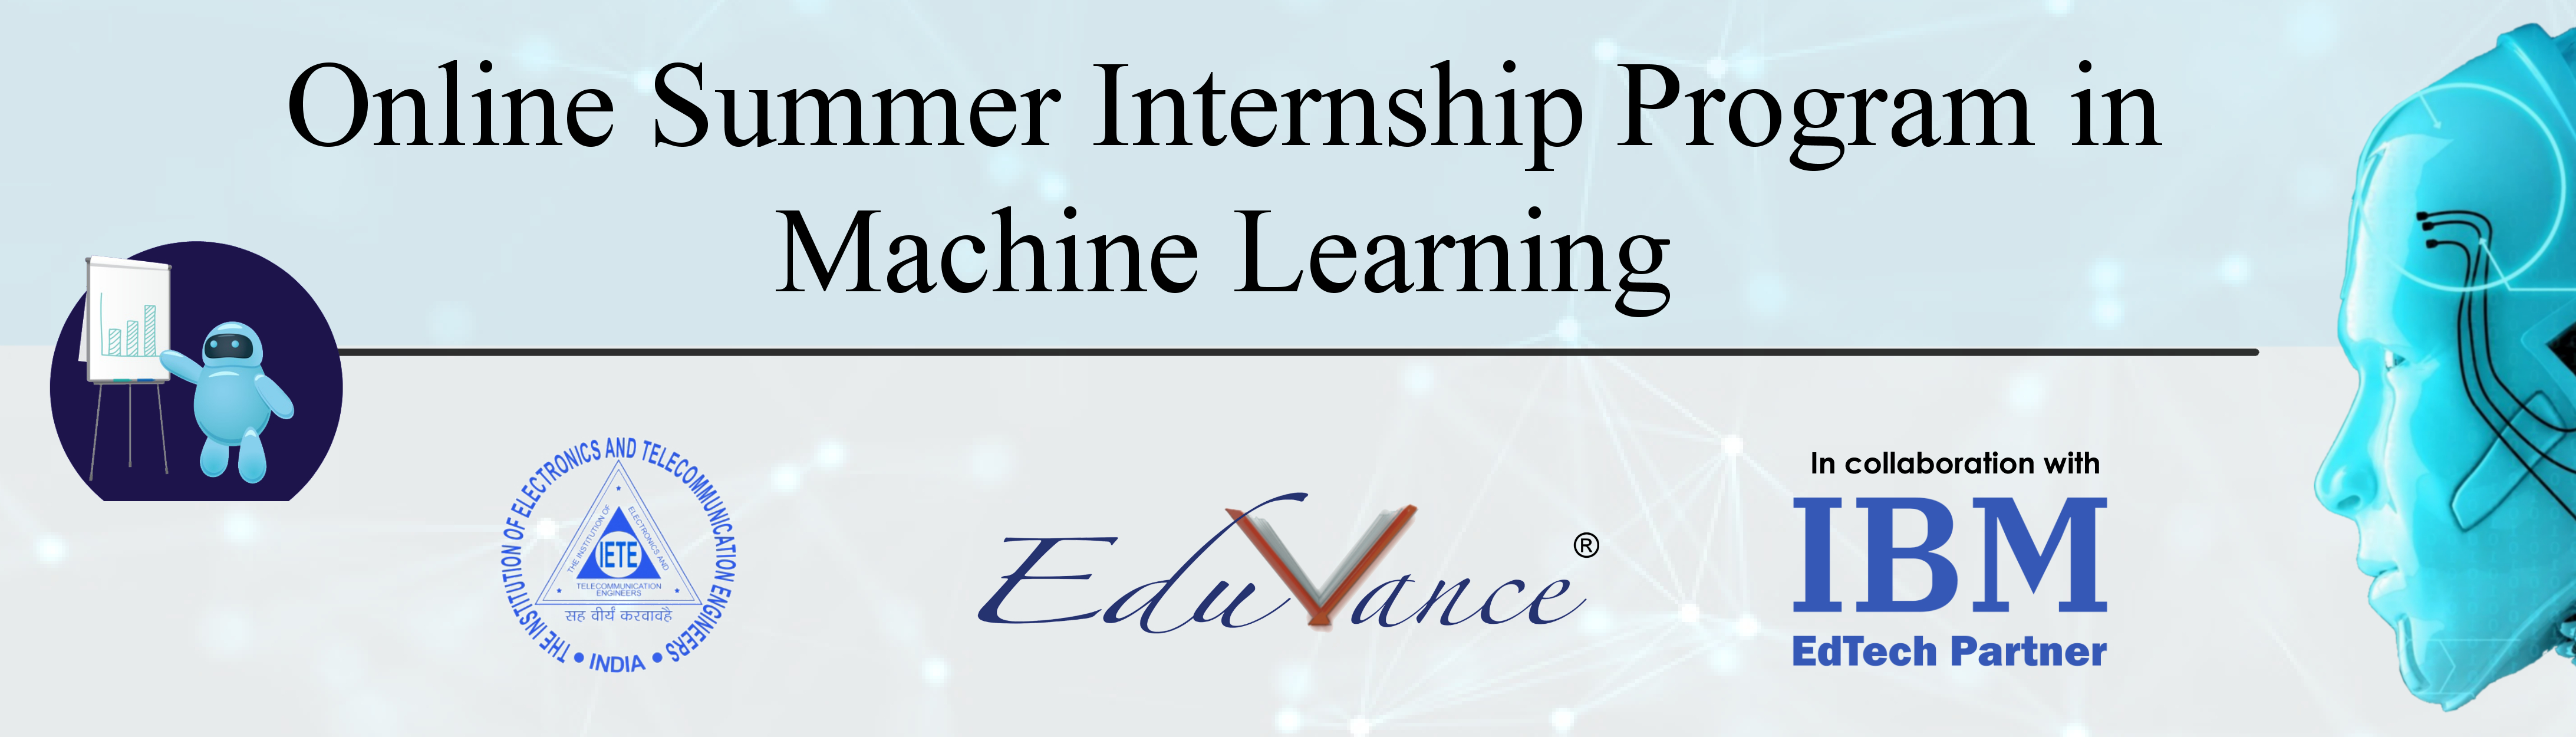 Summer Industrial Training and Internship Program in Machine Learning using Python